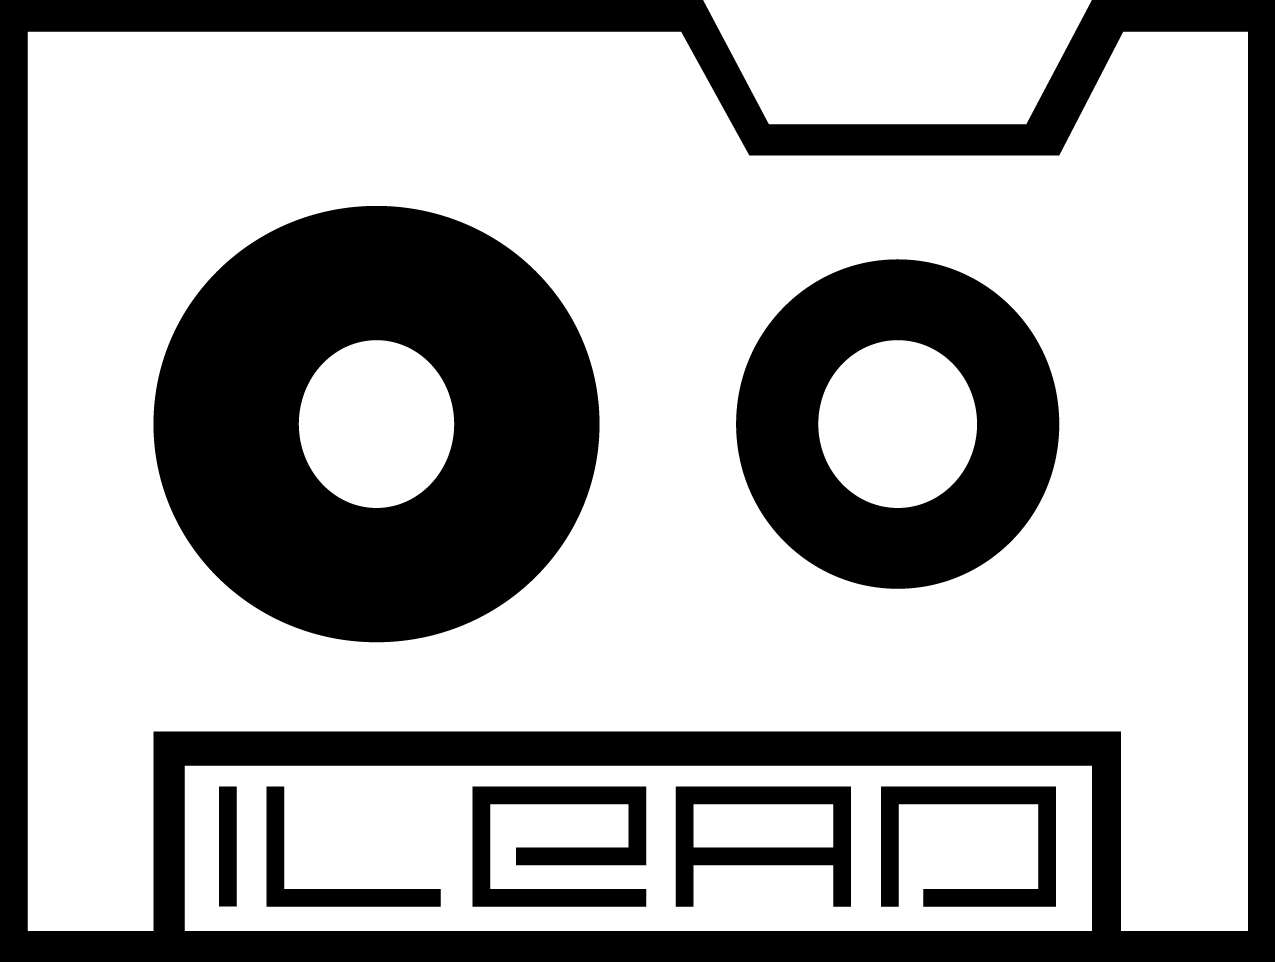 ilead-program-logo